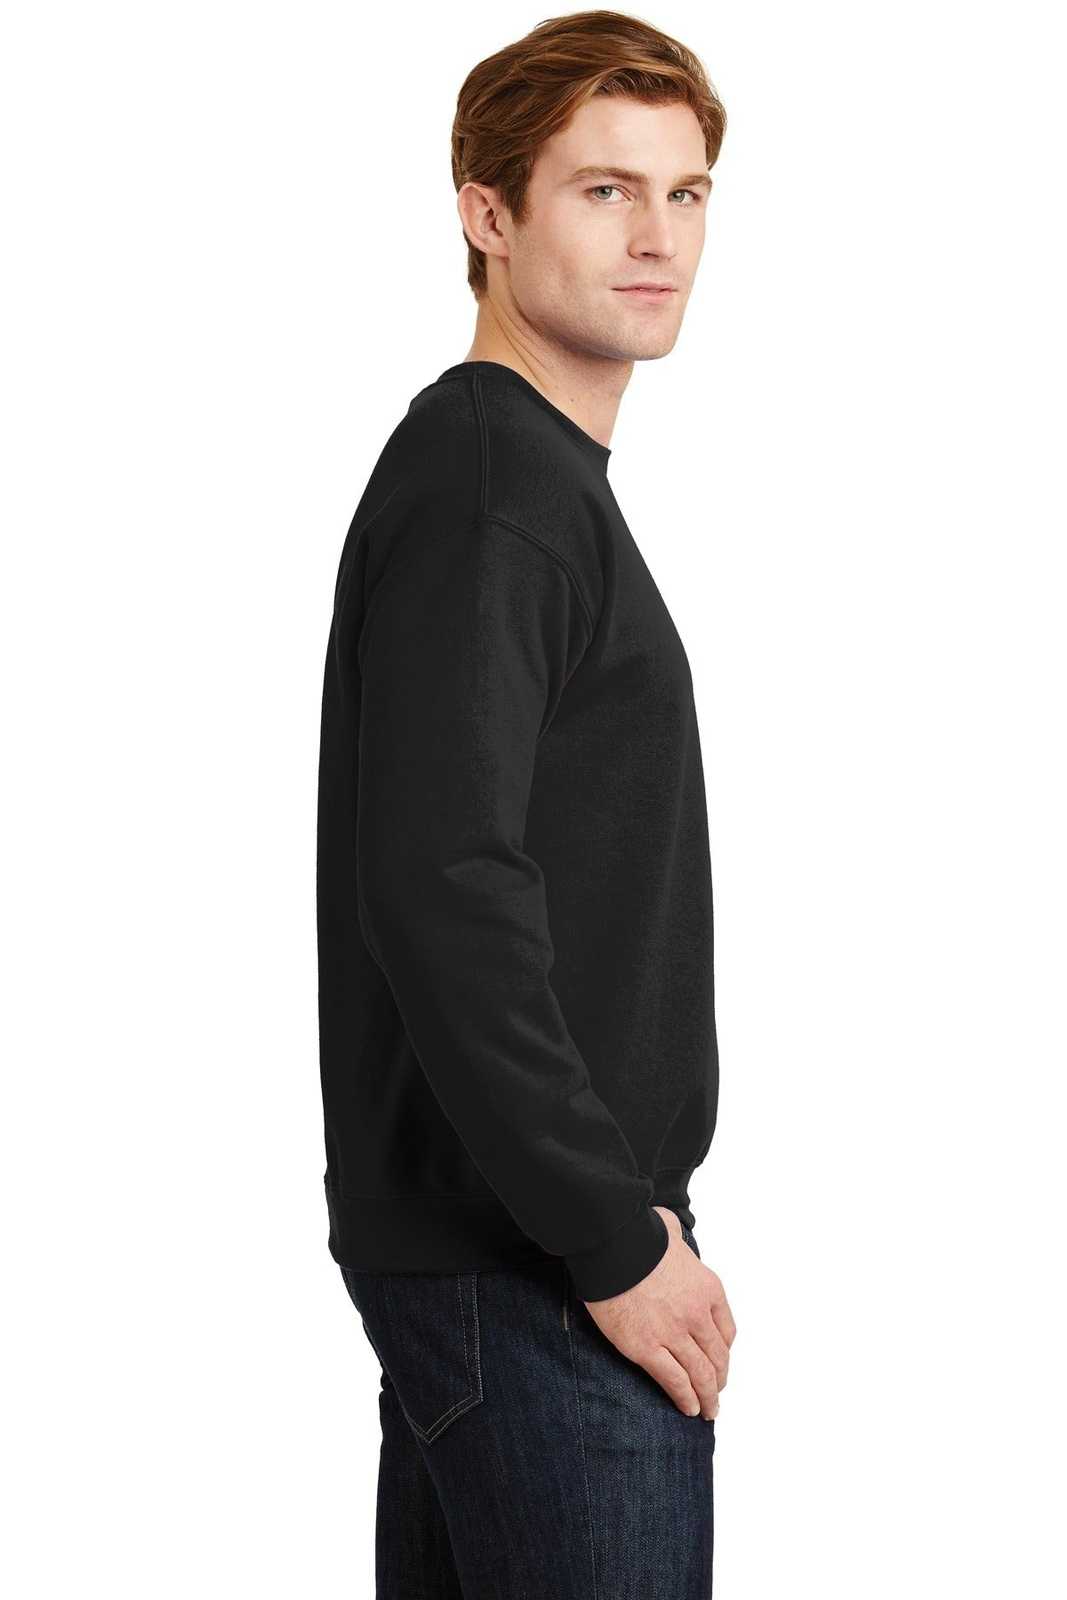 Gildan Heavy Blend youth crew neck sweatshirt Navy XS : :  Clothing, Shoes & Accessories